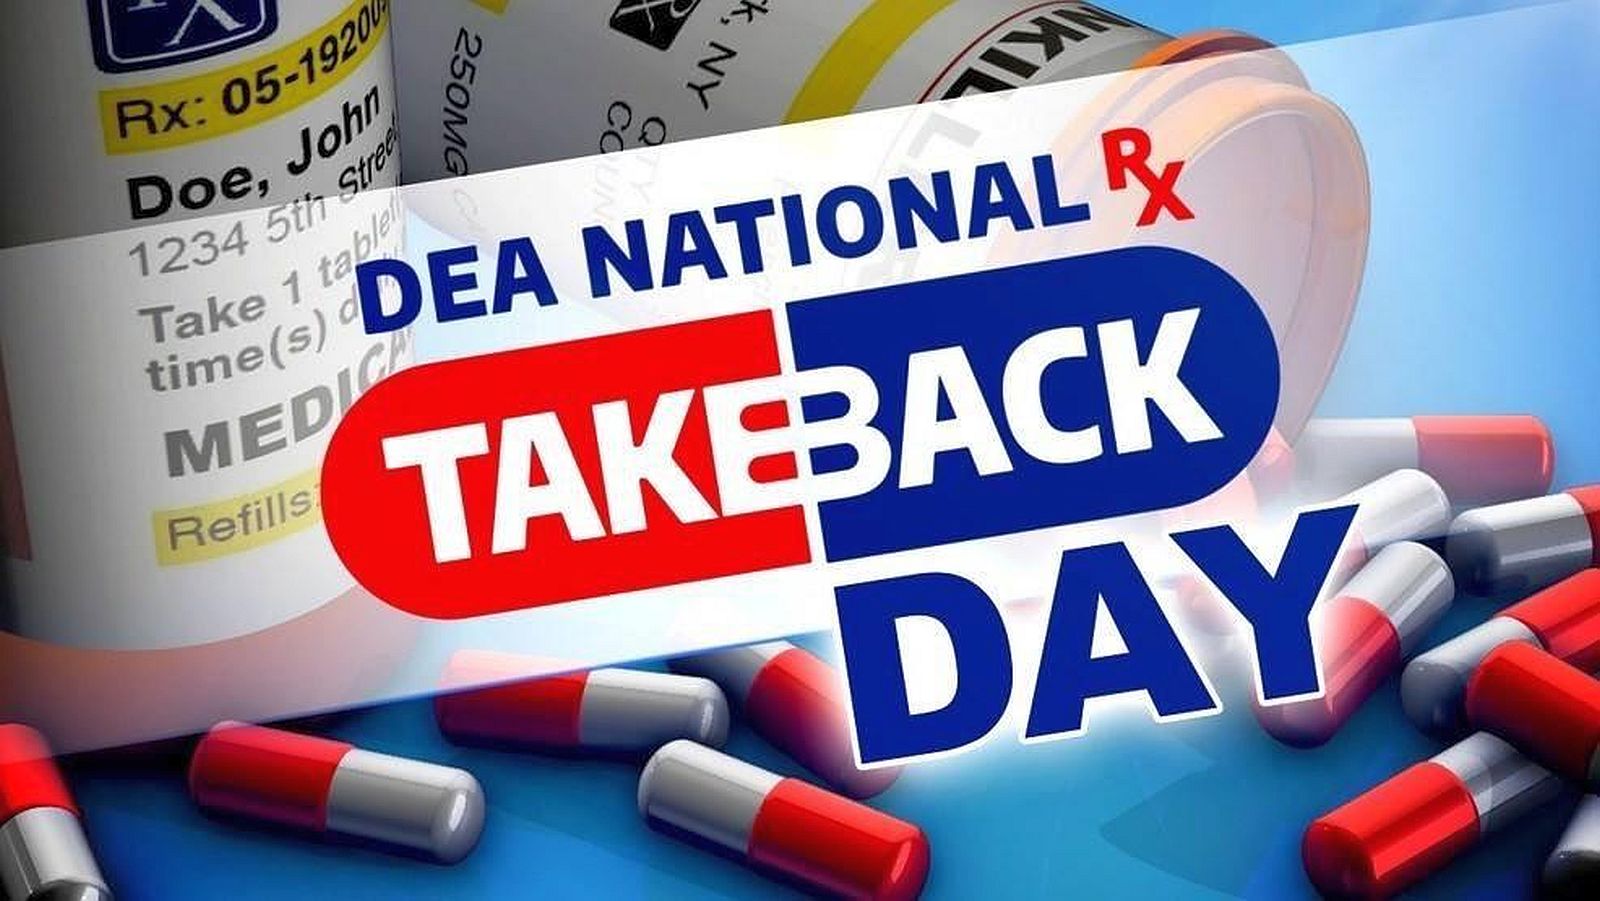 M.C. Sheriff’s Dept. Participates in DEA National Drug Take Back Day